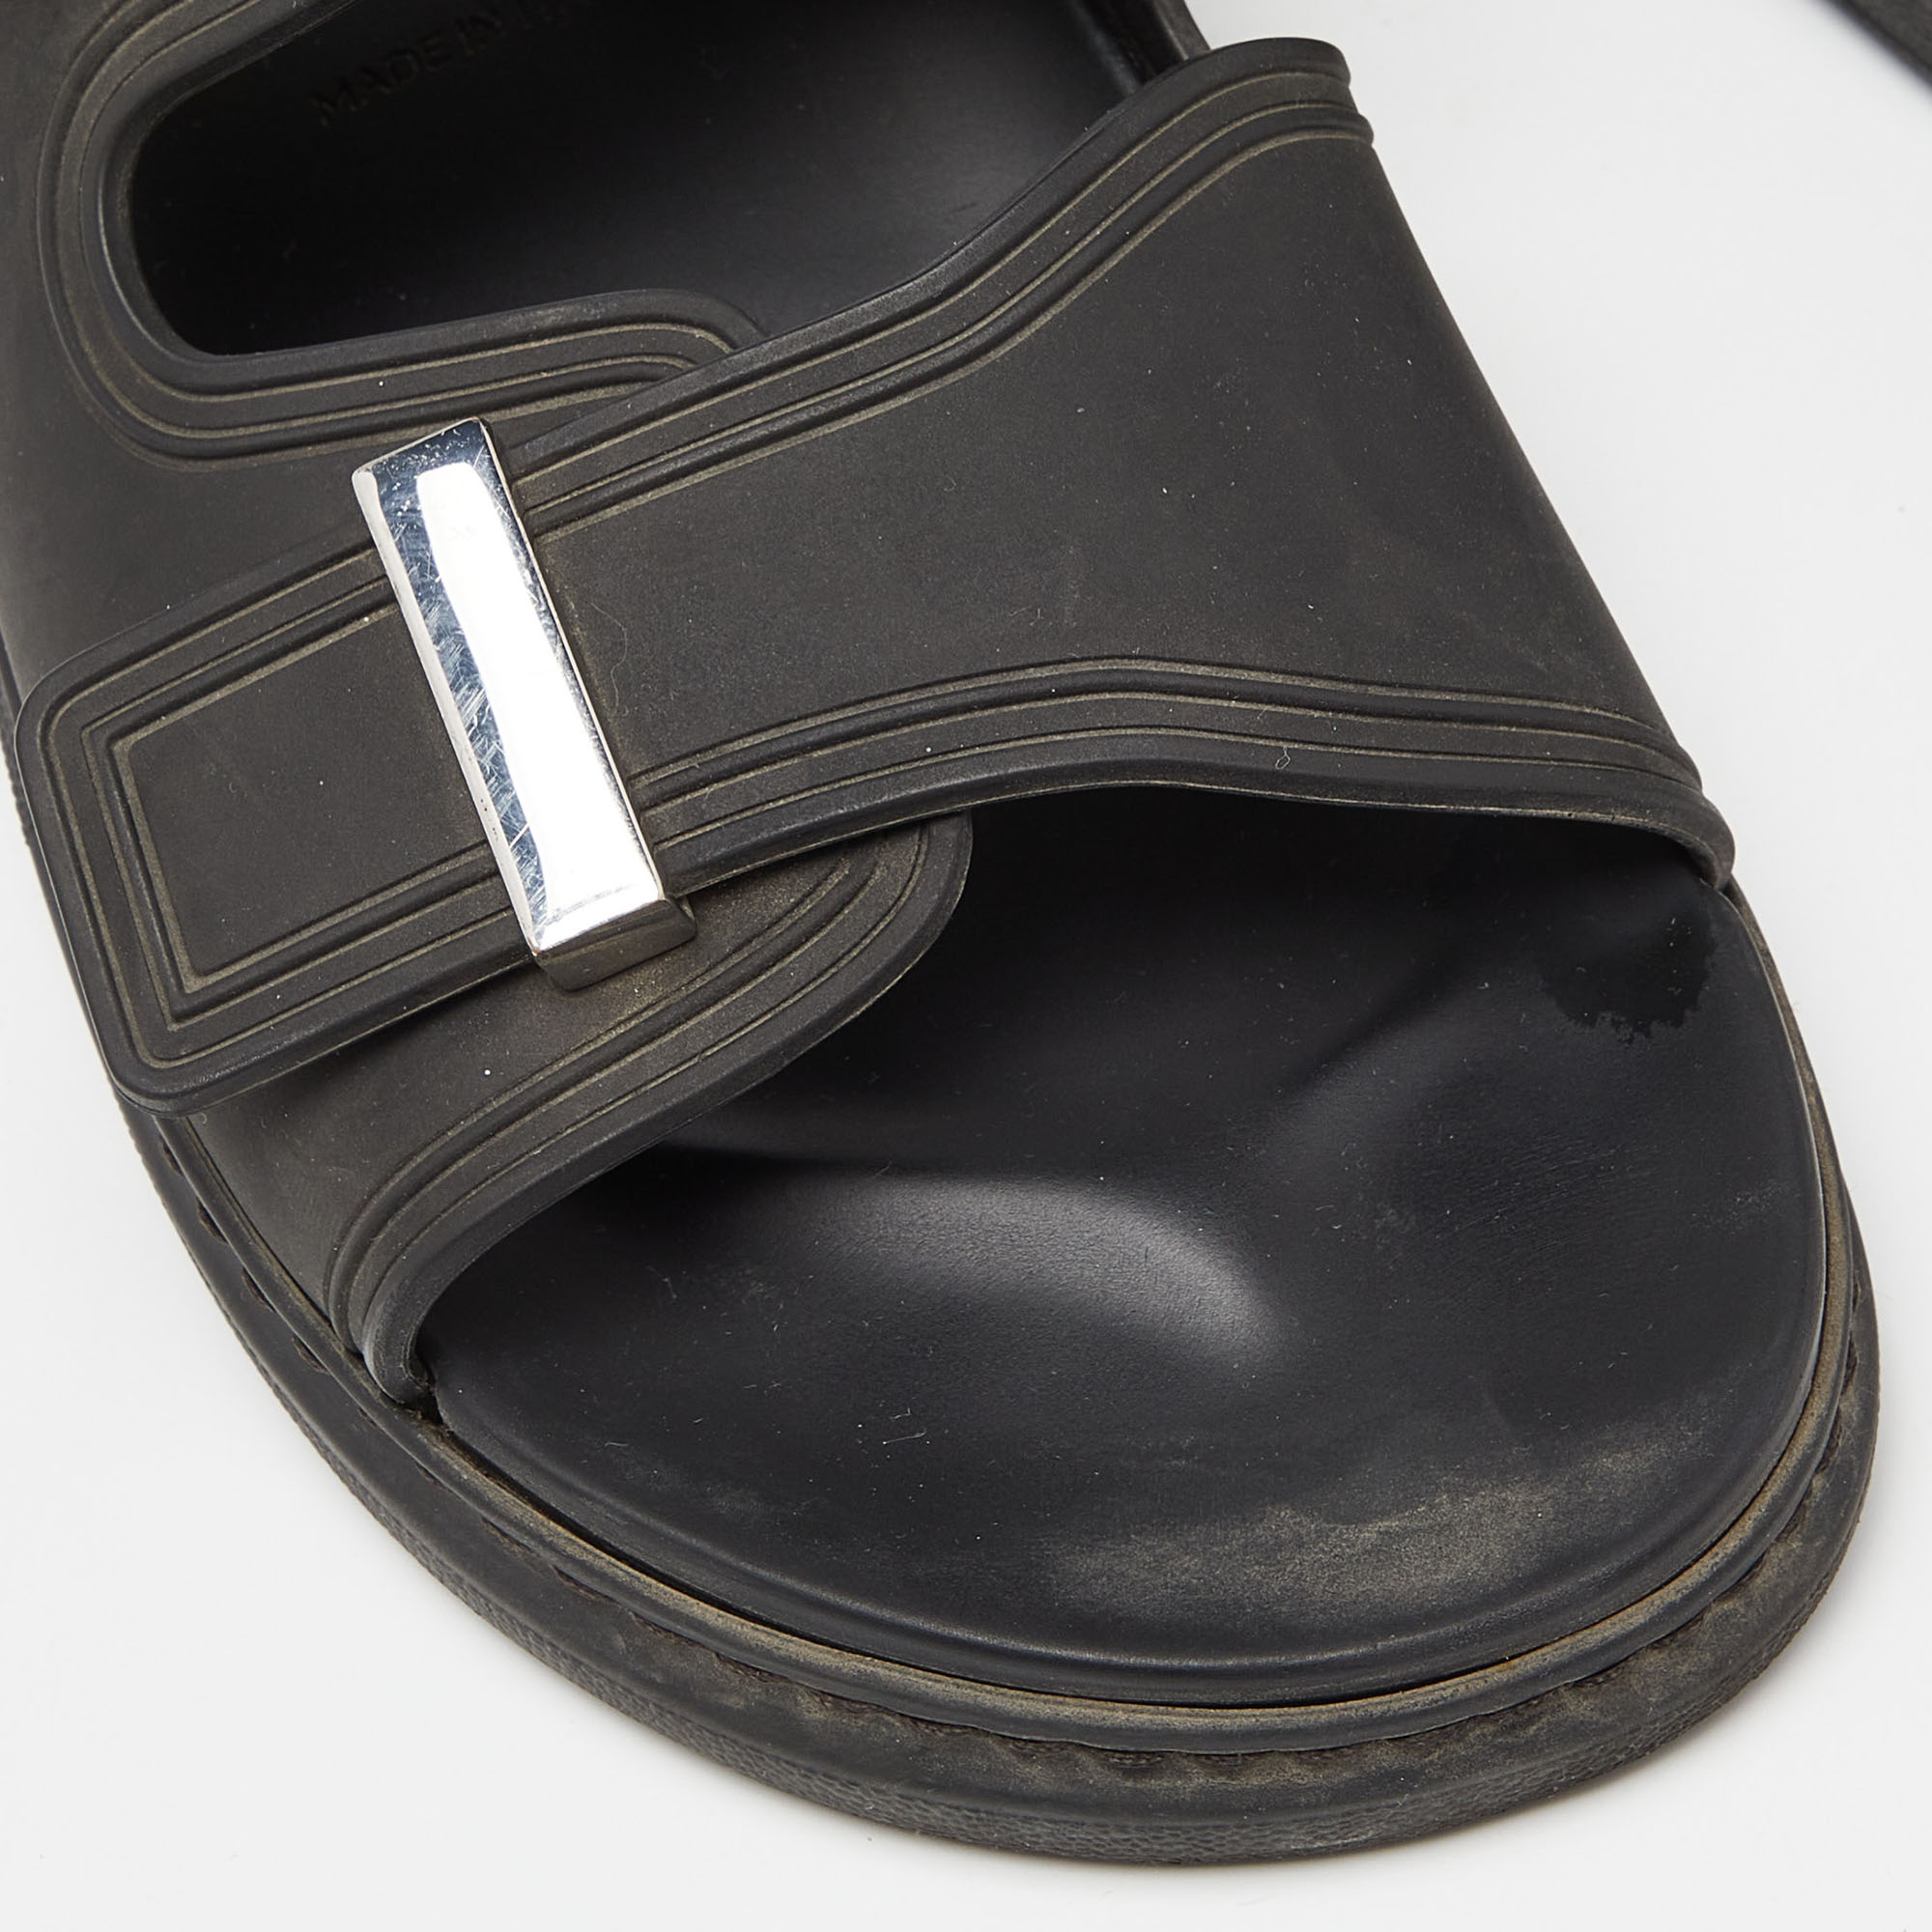 Alexander McQueen Black Rubber Birke Buckle Detail Slide Sandals Size 43